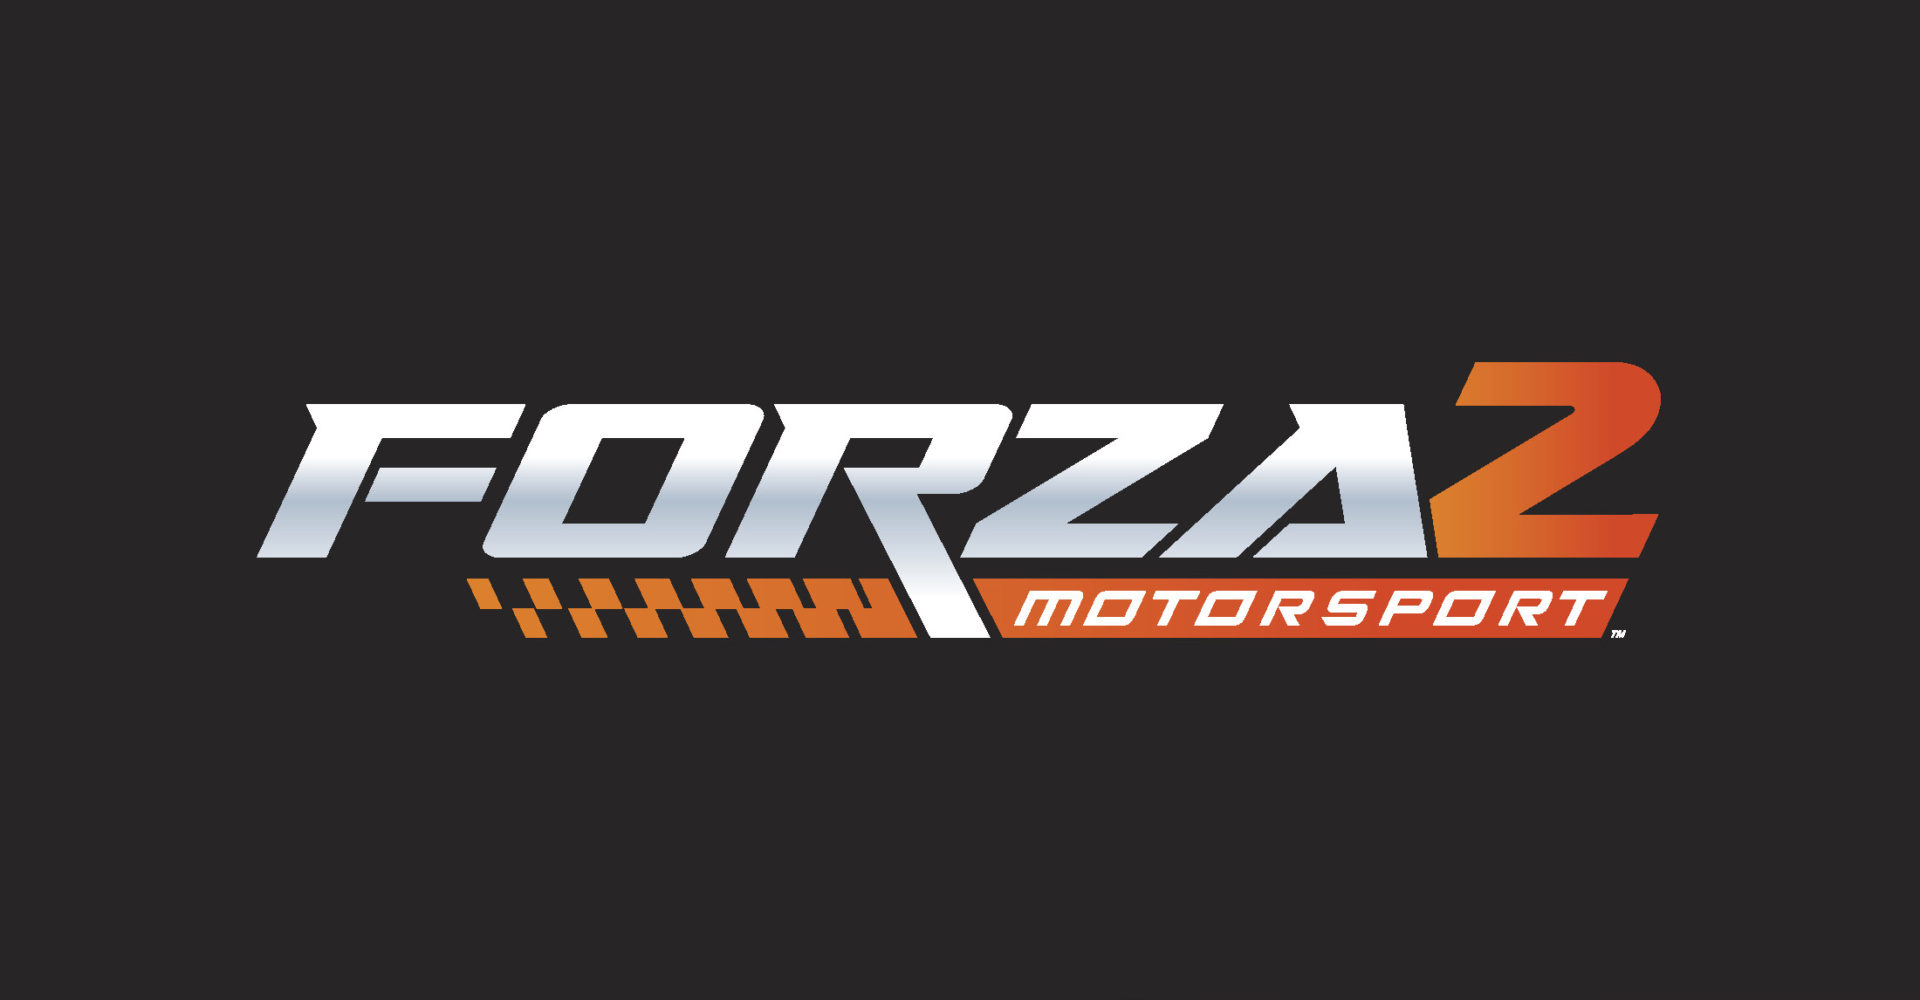 Forza Motorsport 2 box art revealed